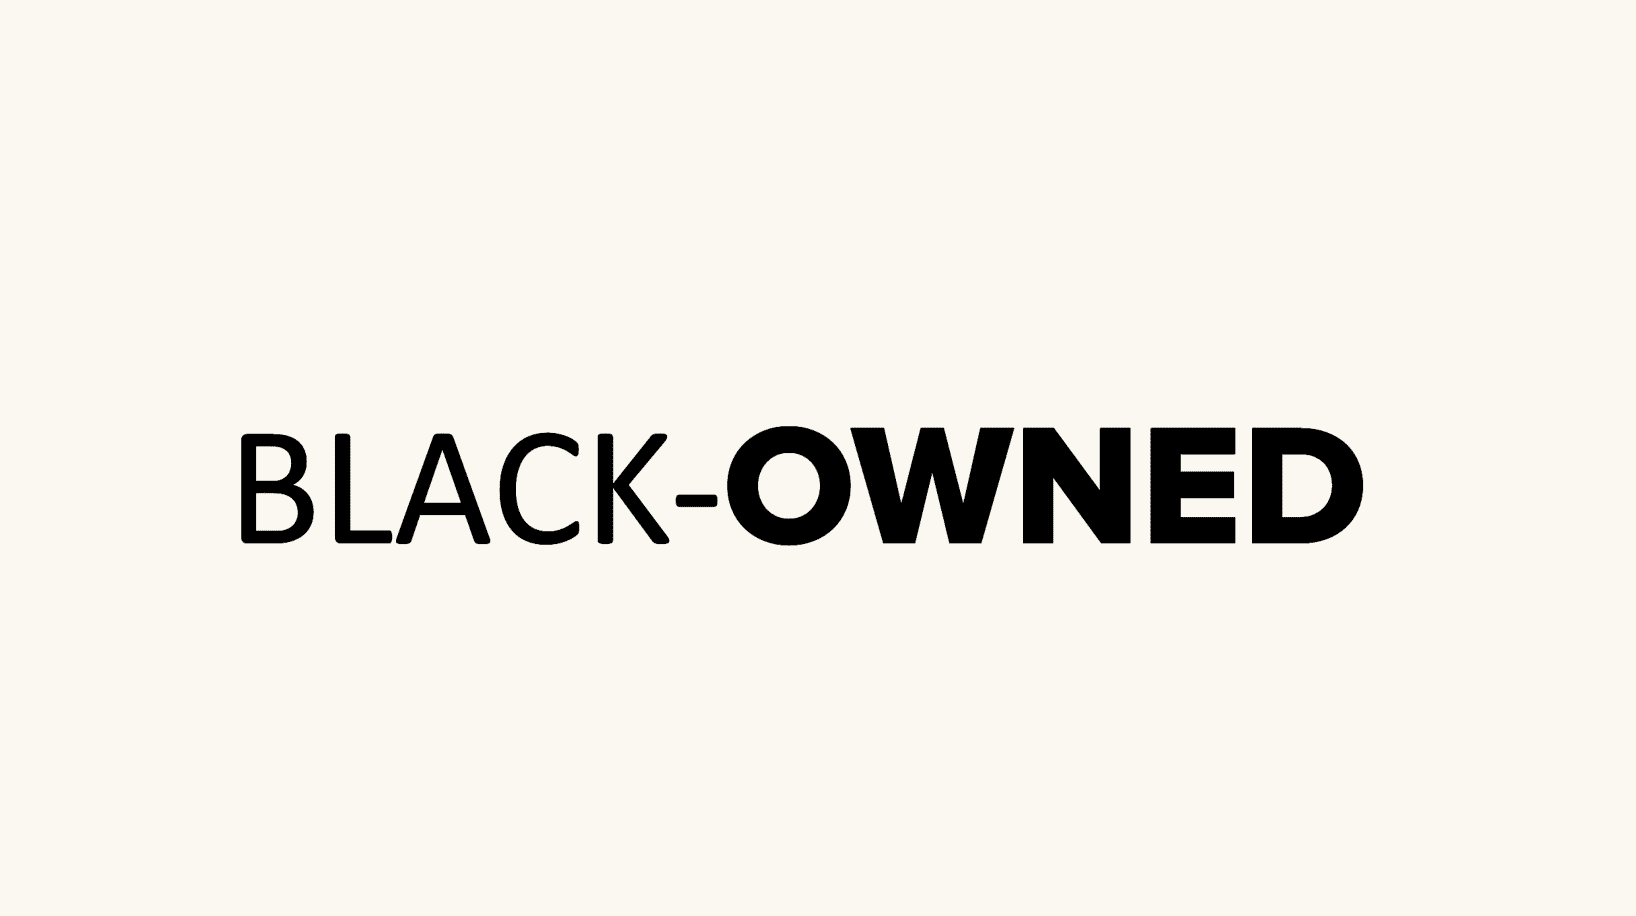 Image reads "Black-owned", Black pound day, Jamii